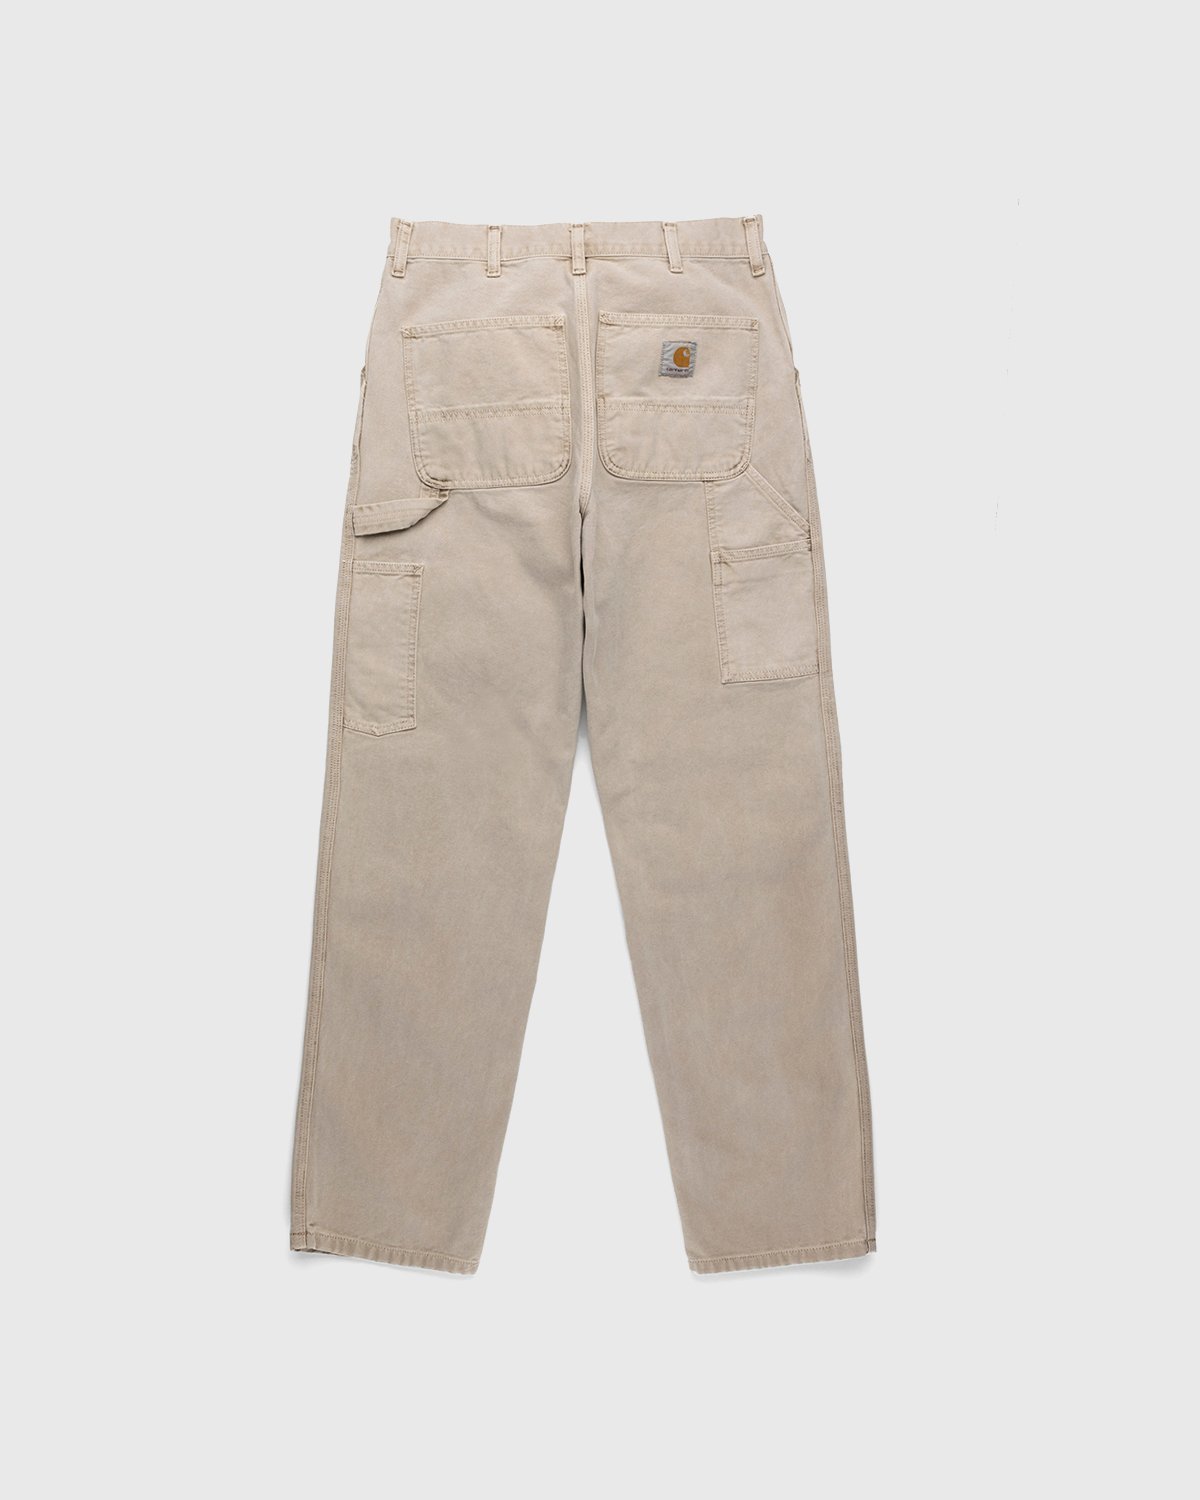 Carhartt WIP - Single Knee Pant Dusty Hamilton Brown Faded - Clothing - Beige - Image 2